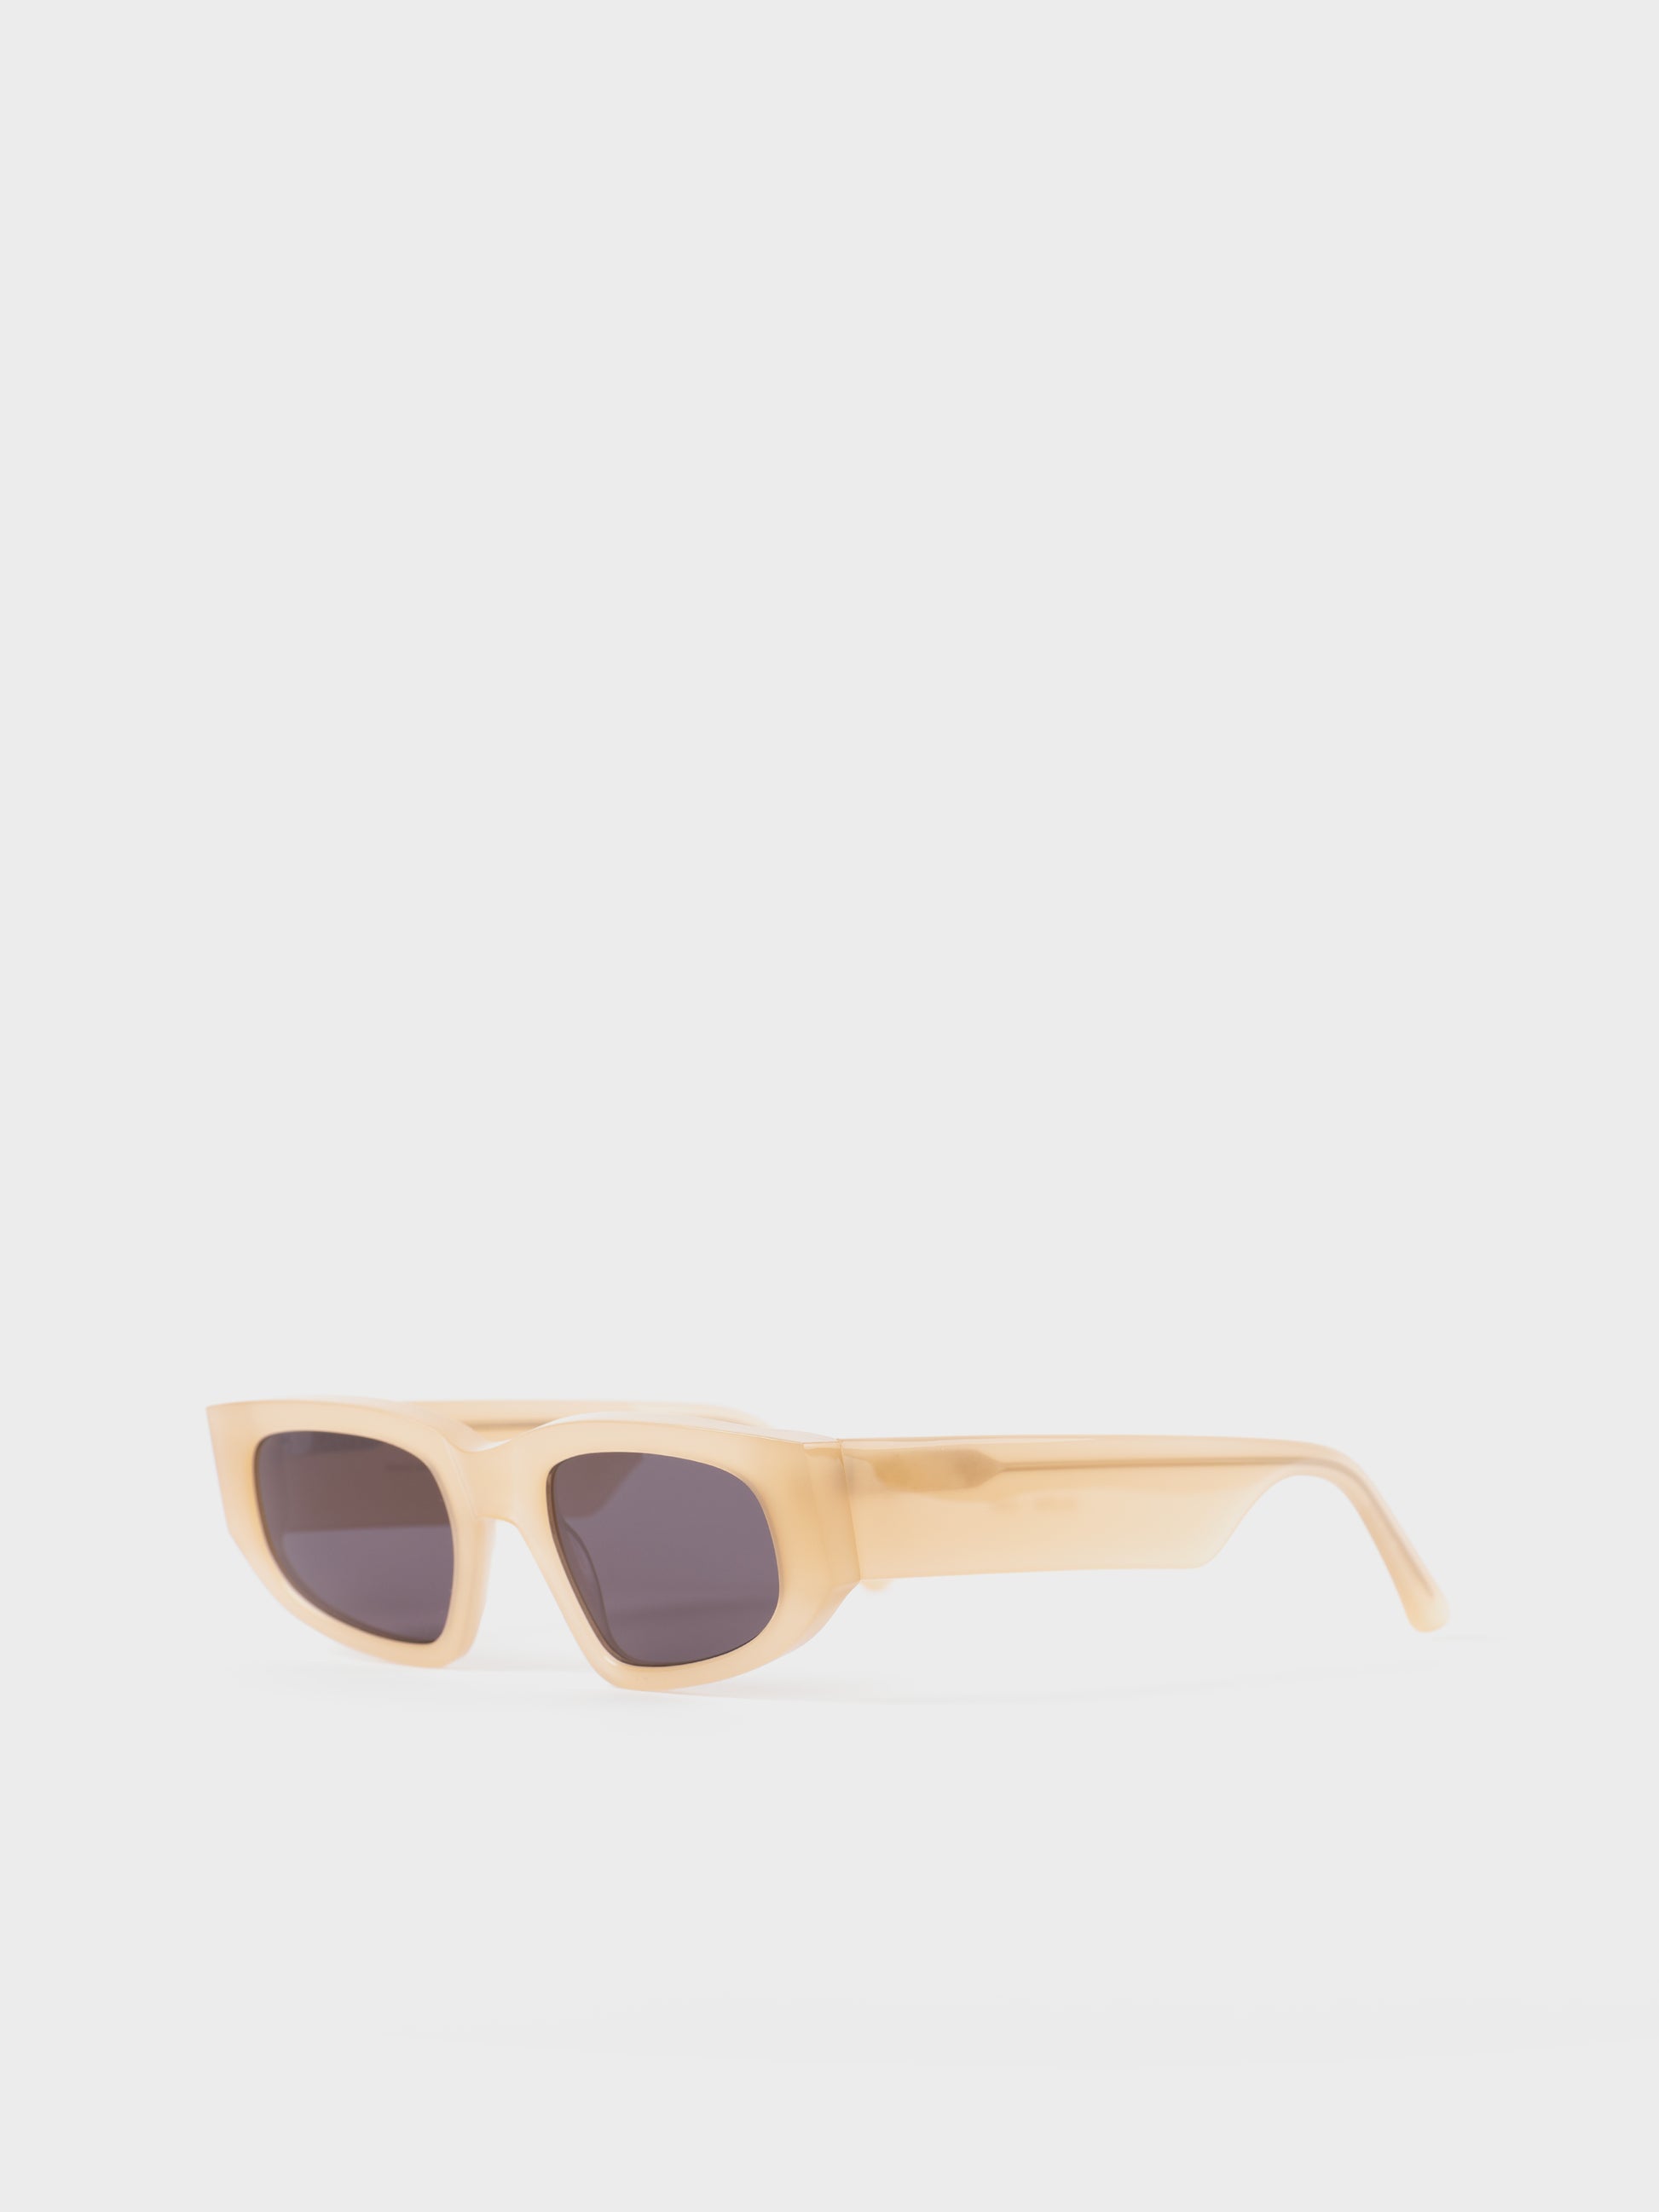 Monokel Sunglasses - Eclipse/Matt Sand